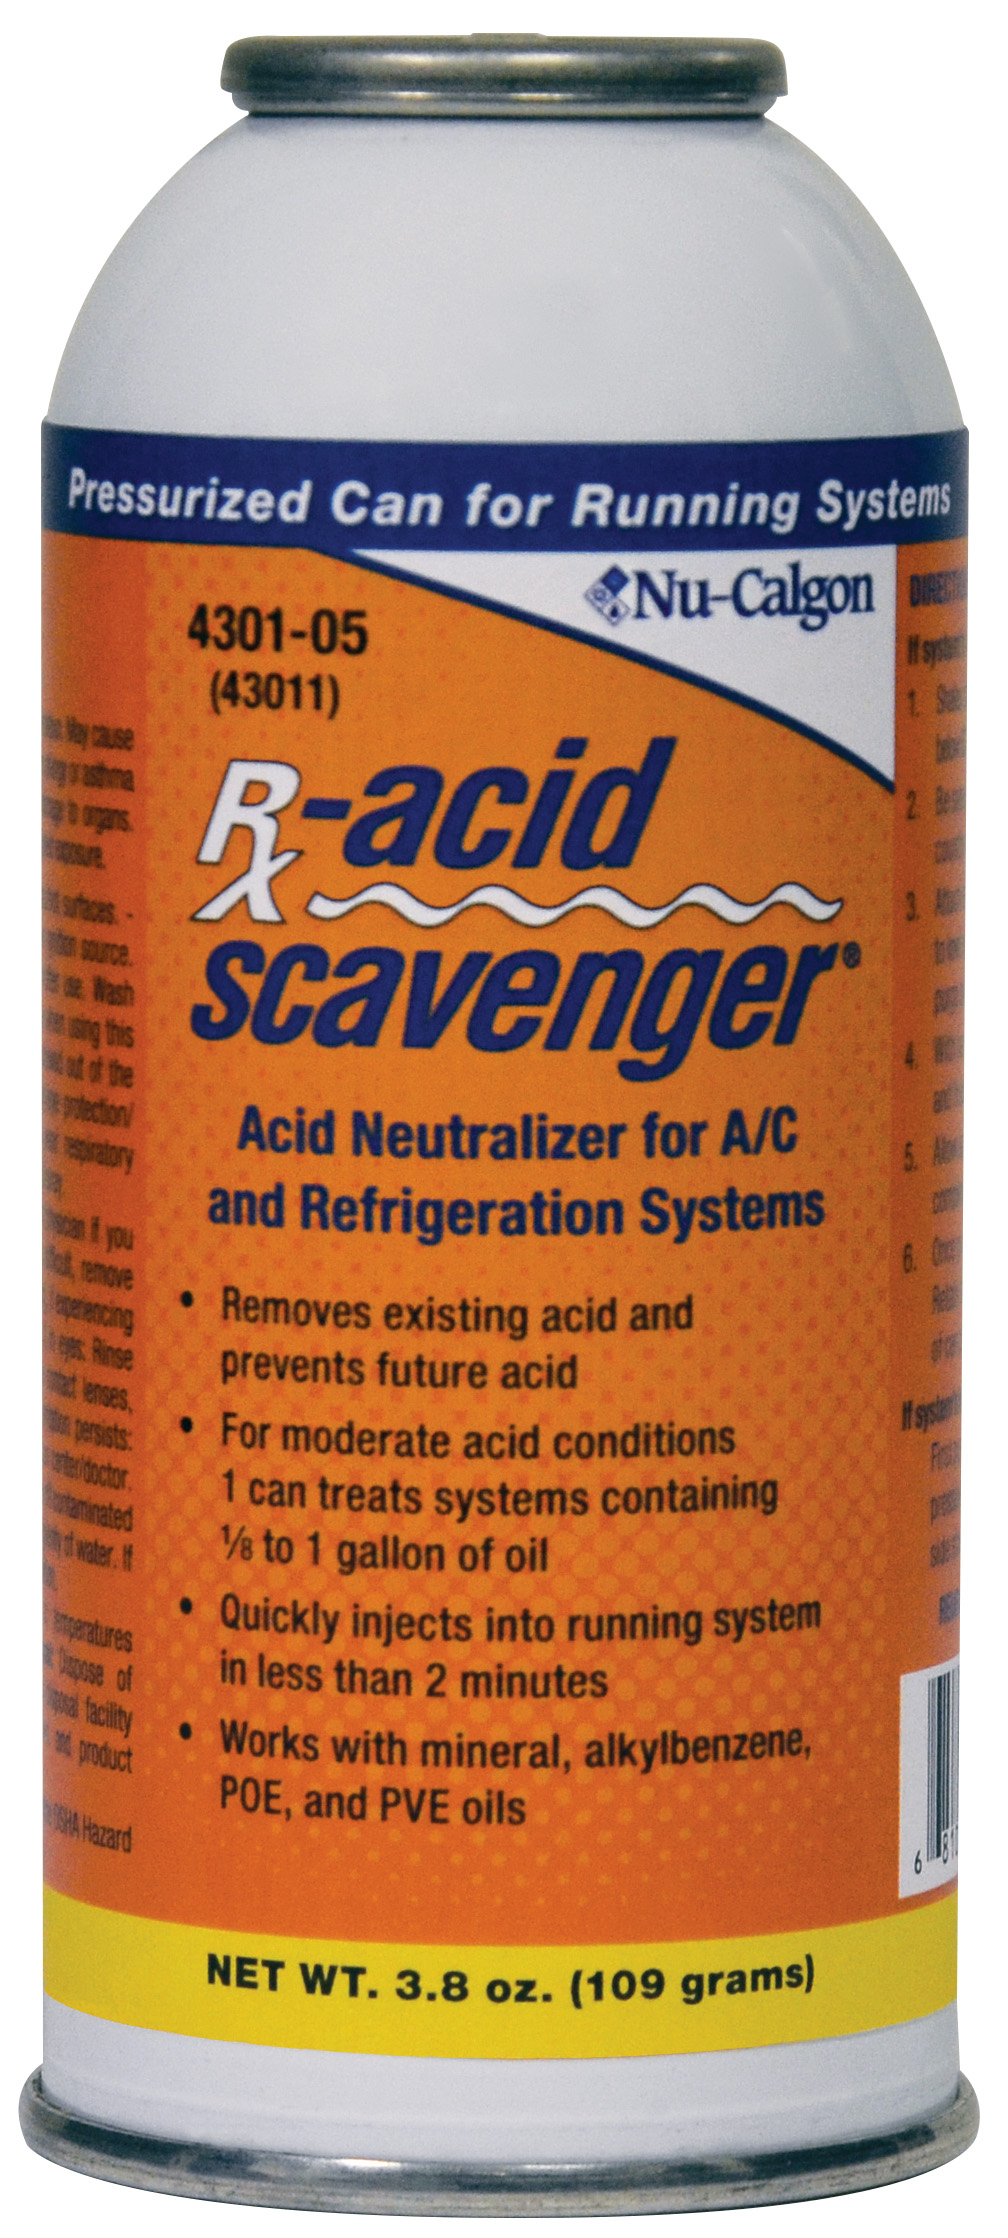 4301-05 PRESSURIZED RX-ACID SCAVENGER - Acid Tests and Neutralizers